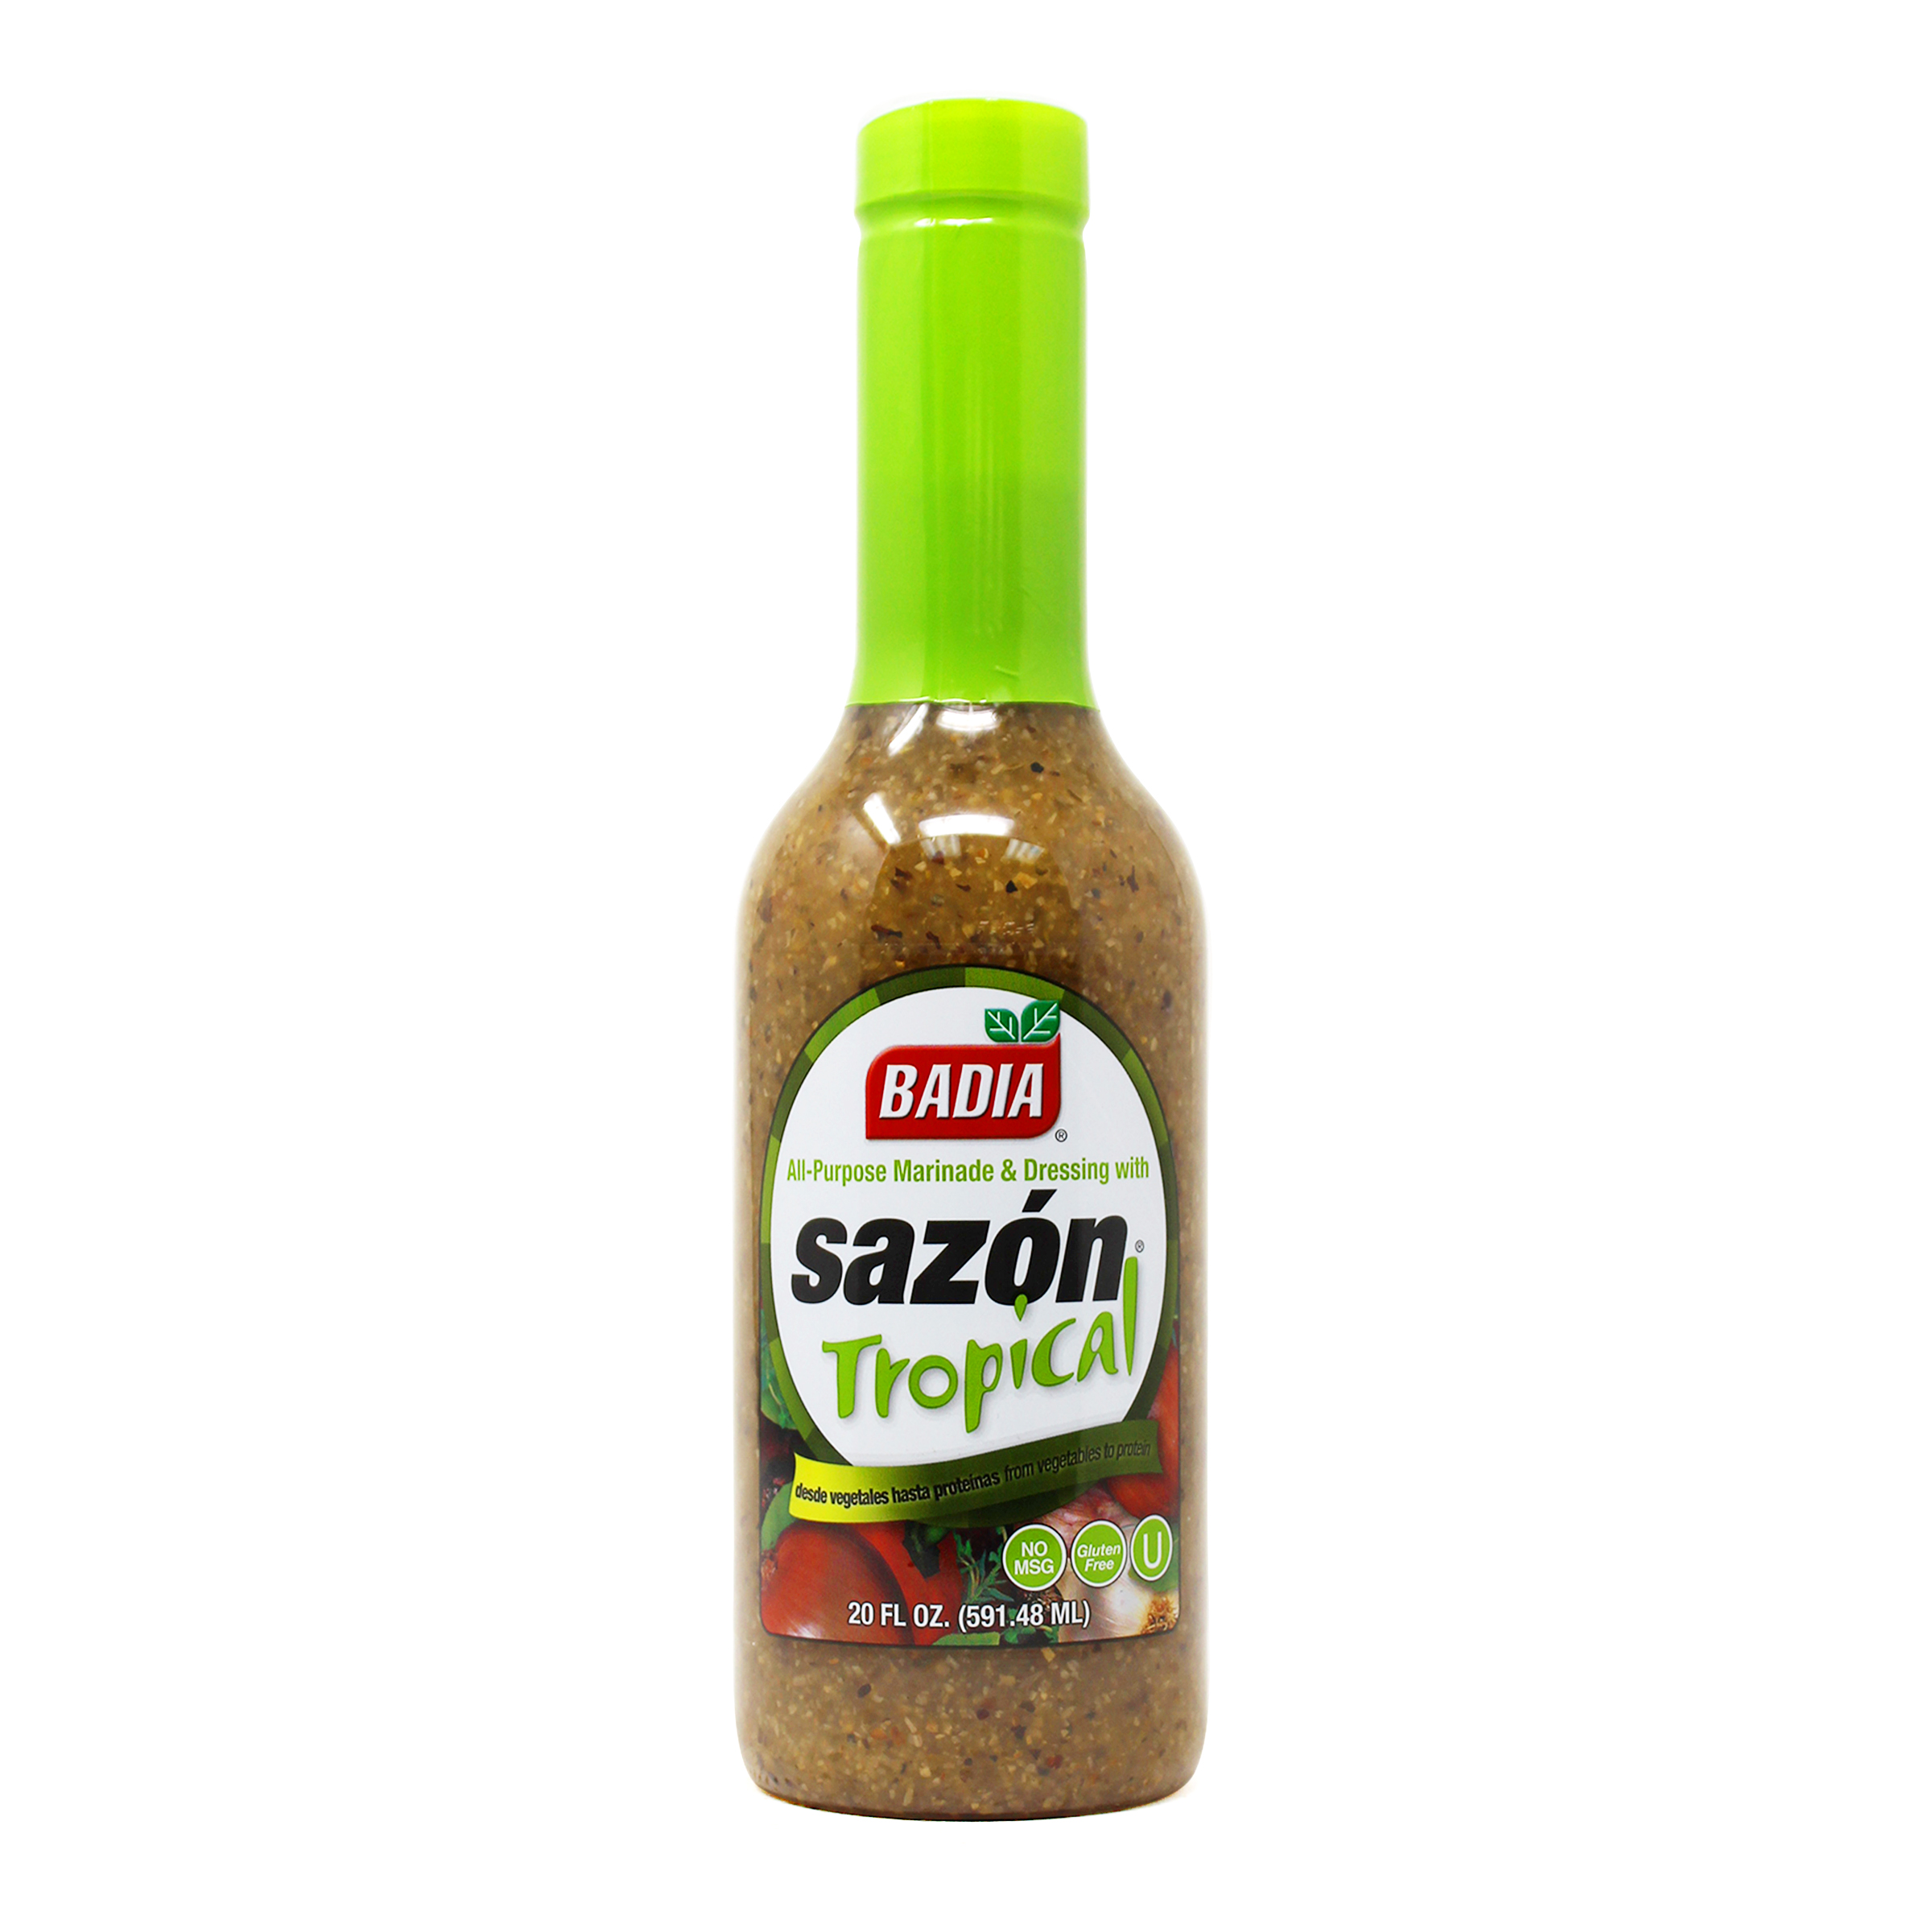 Badia Complete Seasoning, Sazon Tropical with Annatto & Coriander